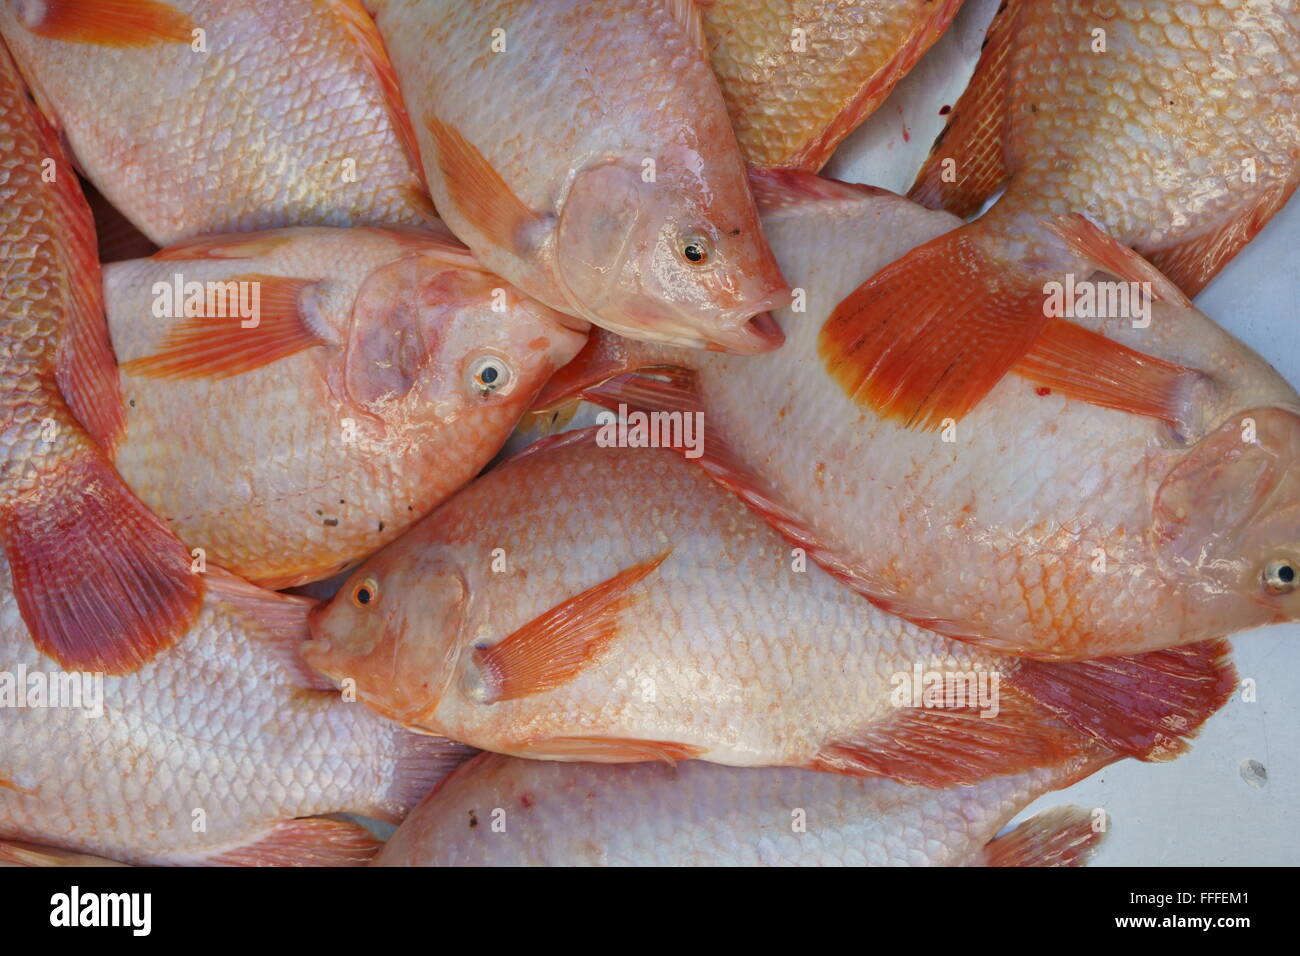 fresh red tilapia freshwater fish Stock Photo